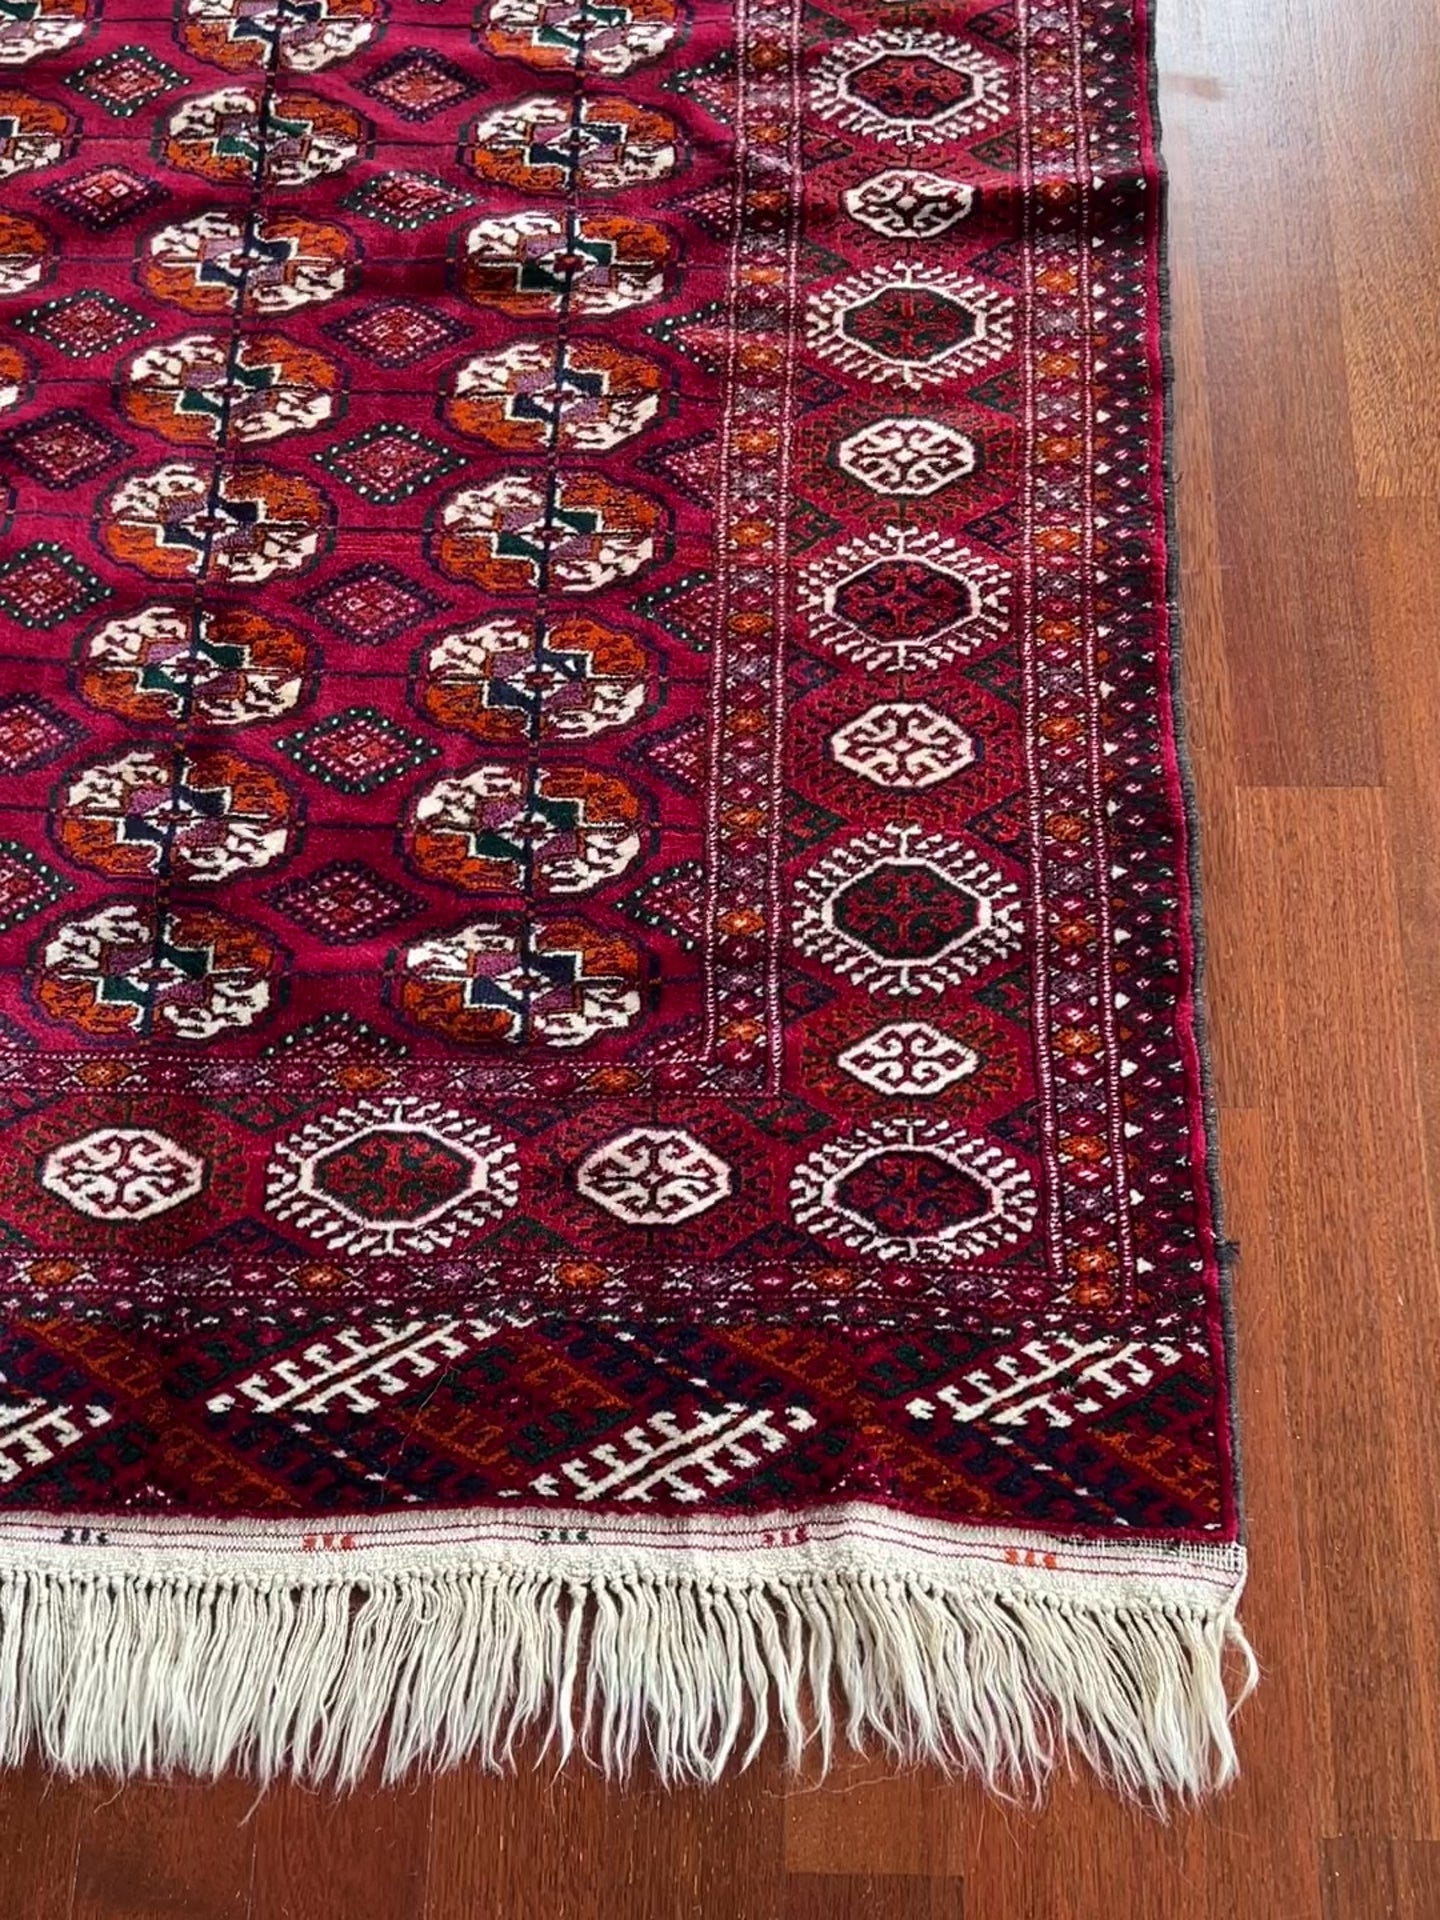 Small Bukhara Turkmen Rug shop san francisco bay area oriental rug berkeley buy rug palo alto online rug shopping california ontario canada